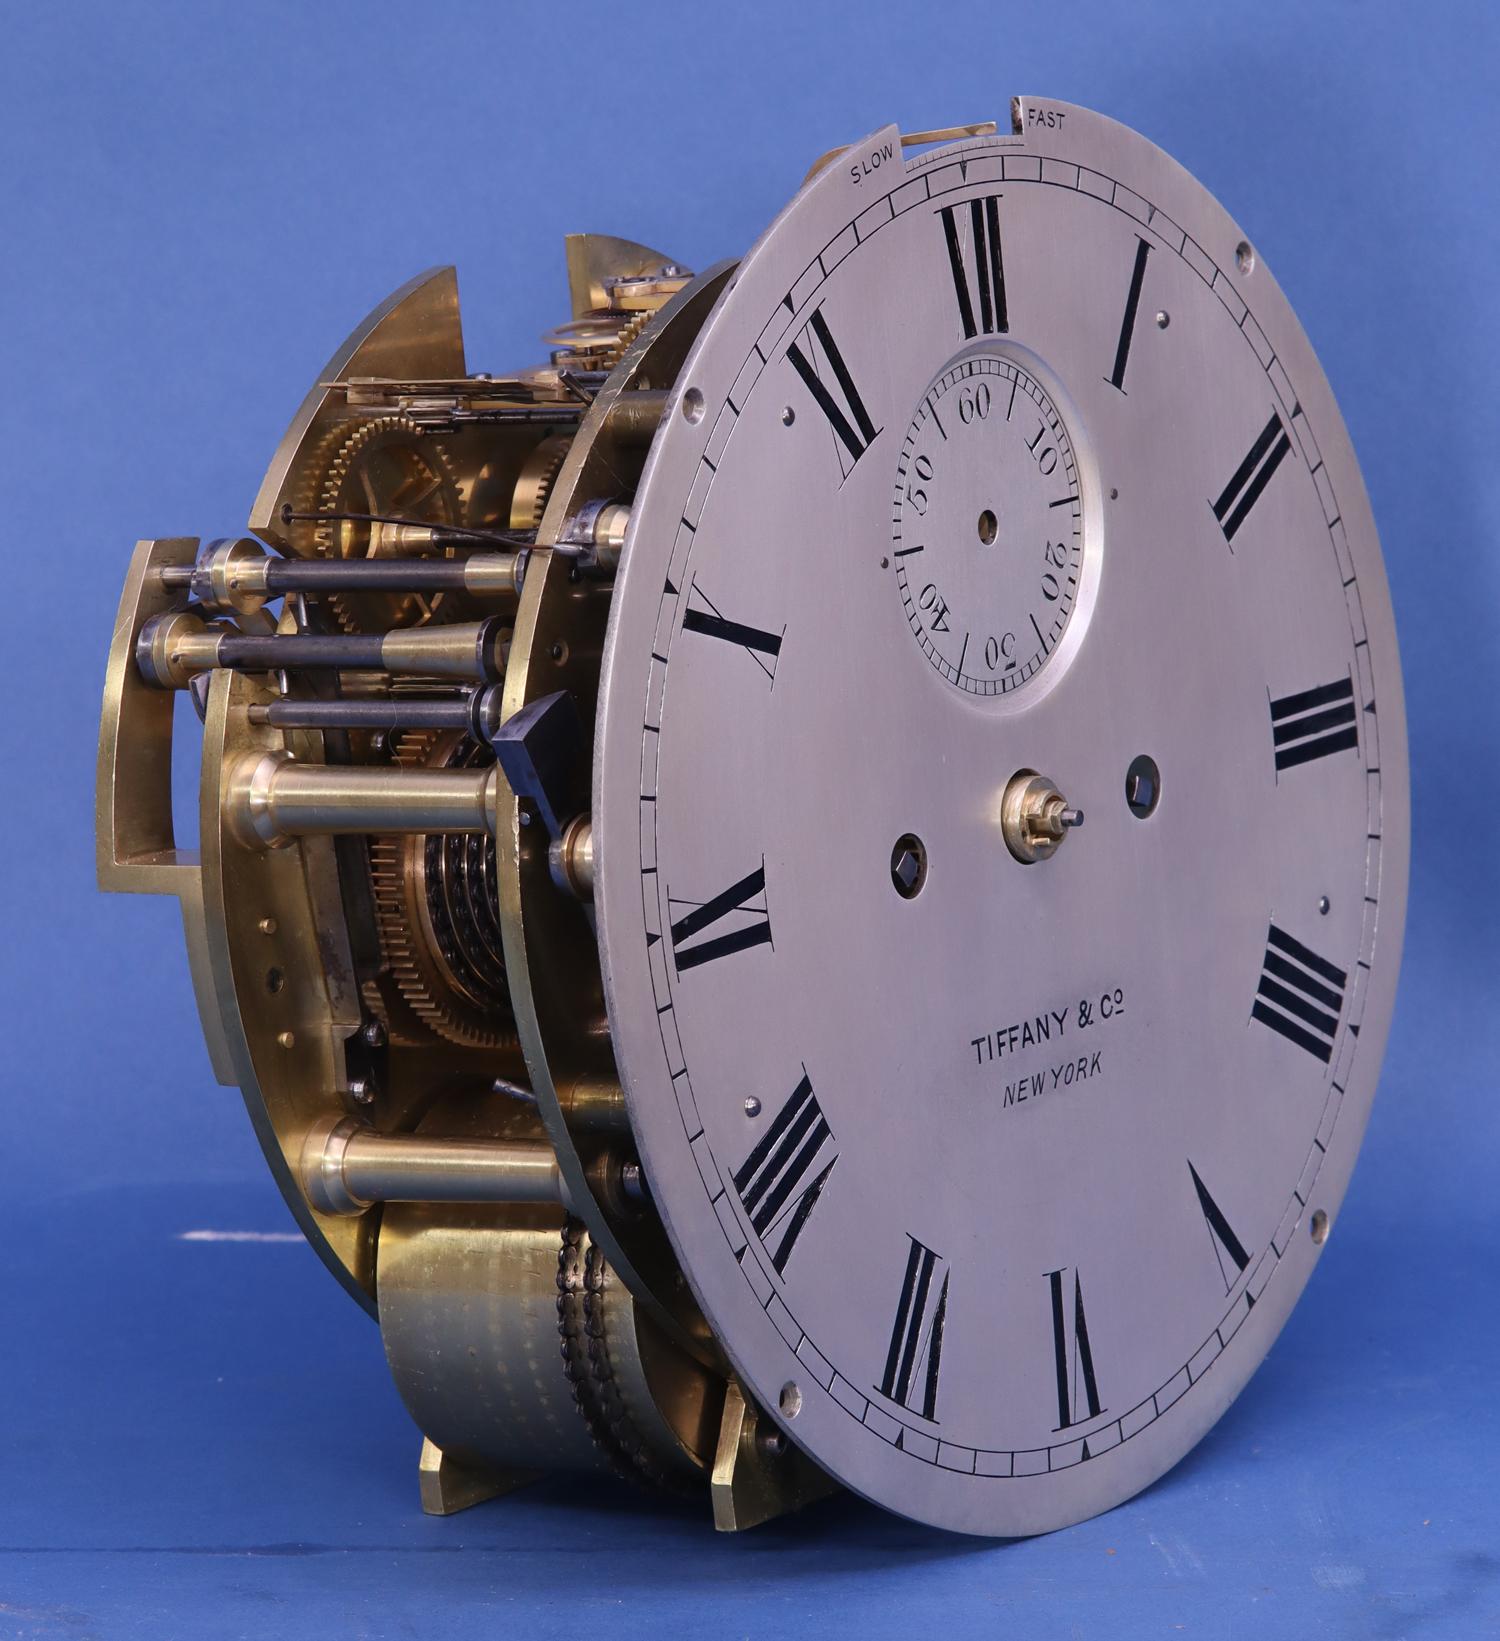 Late 19th Century Late Victorian English Bulkhead Clock with Dog’s Watch Ship's Strike.